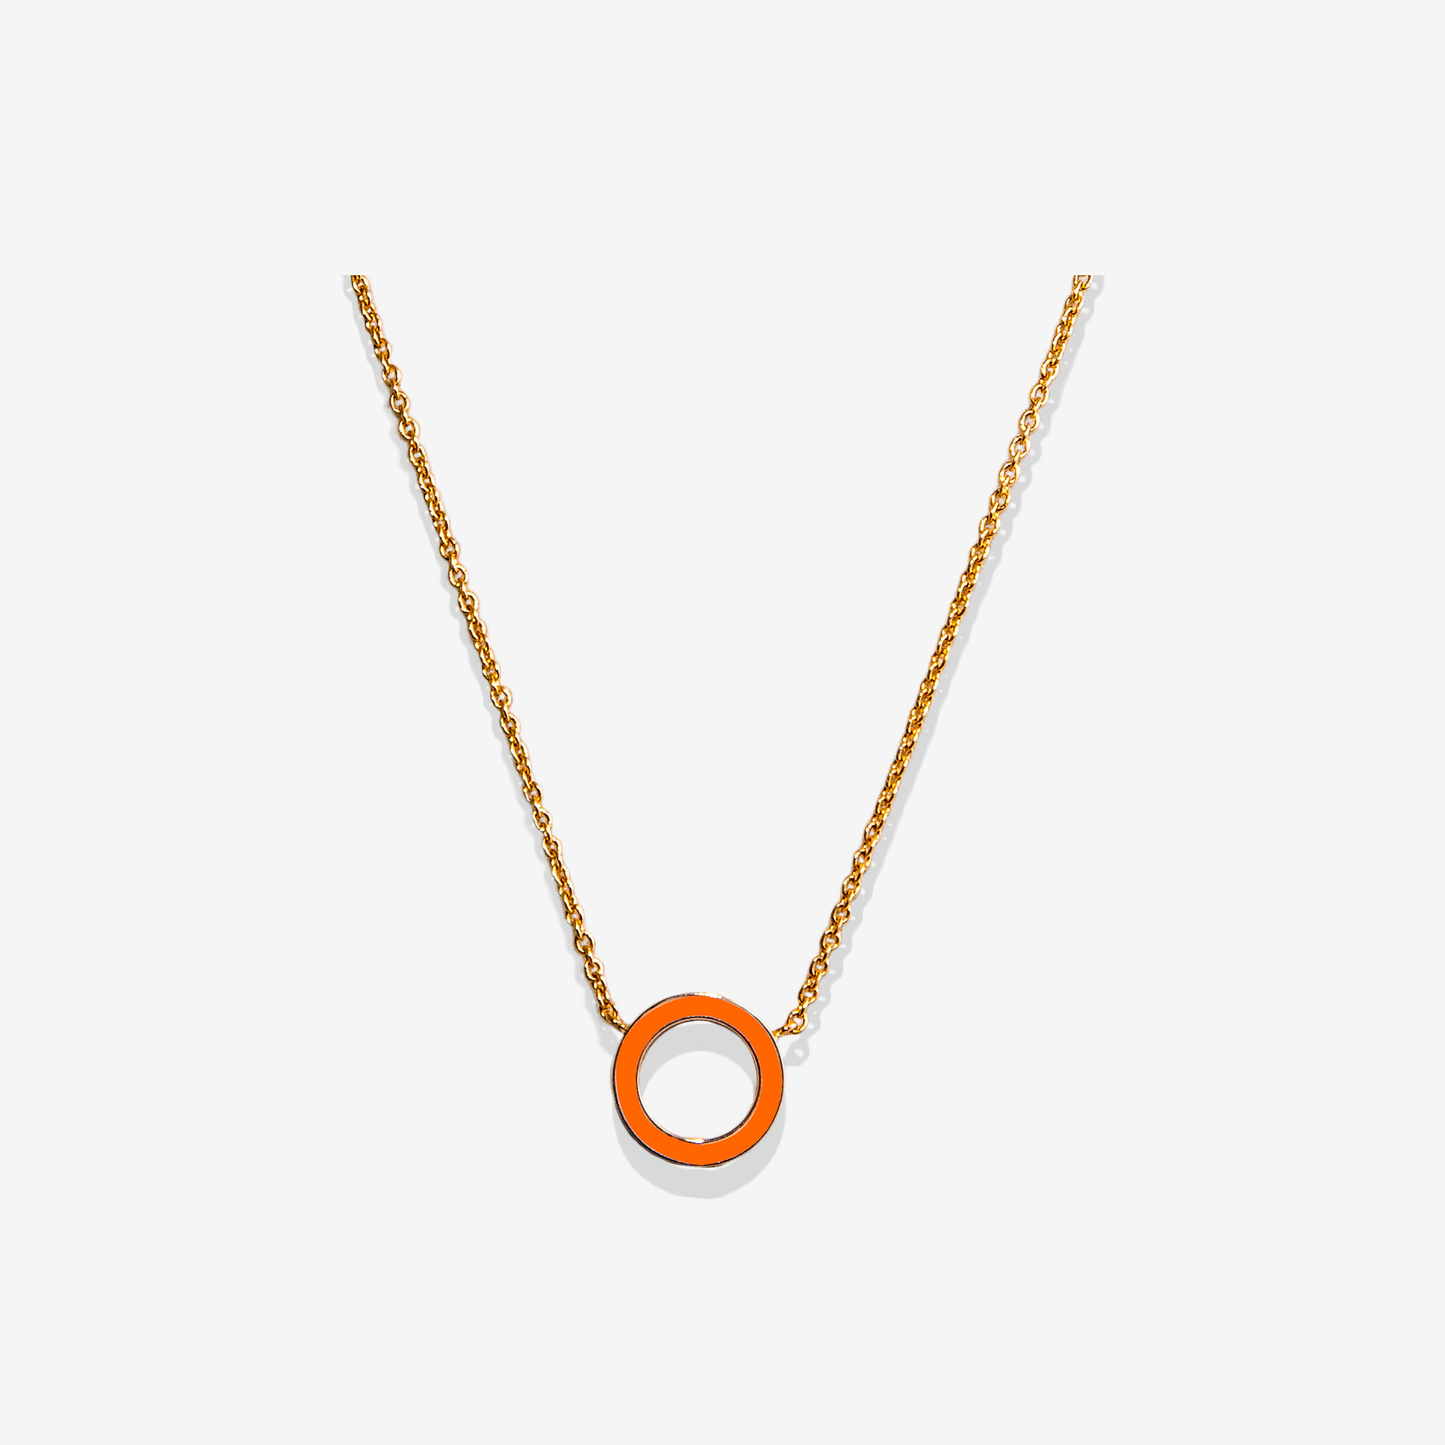 Inside orange necklace